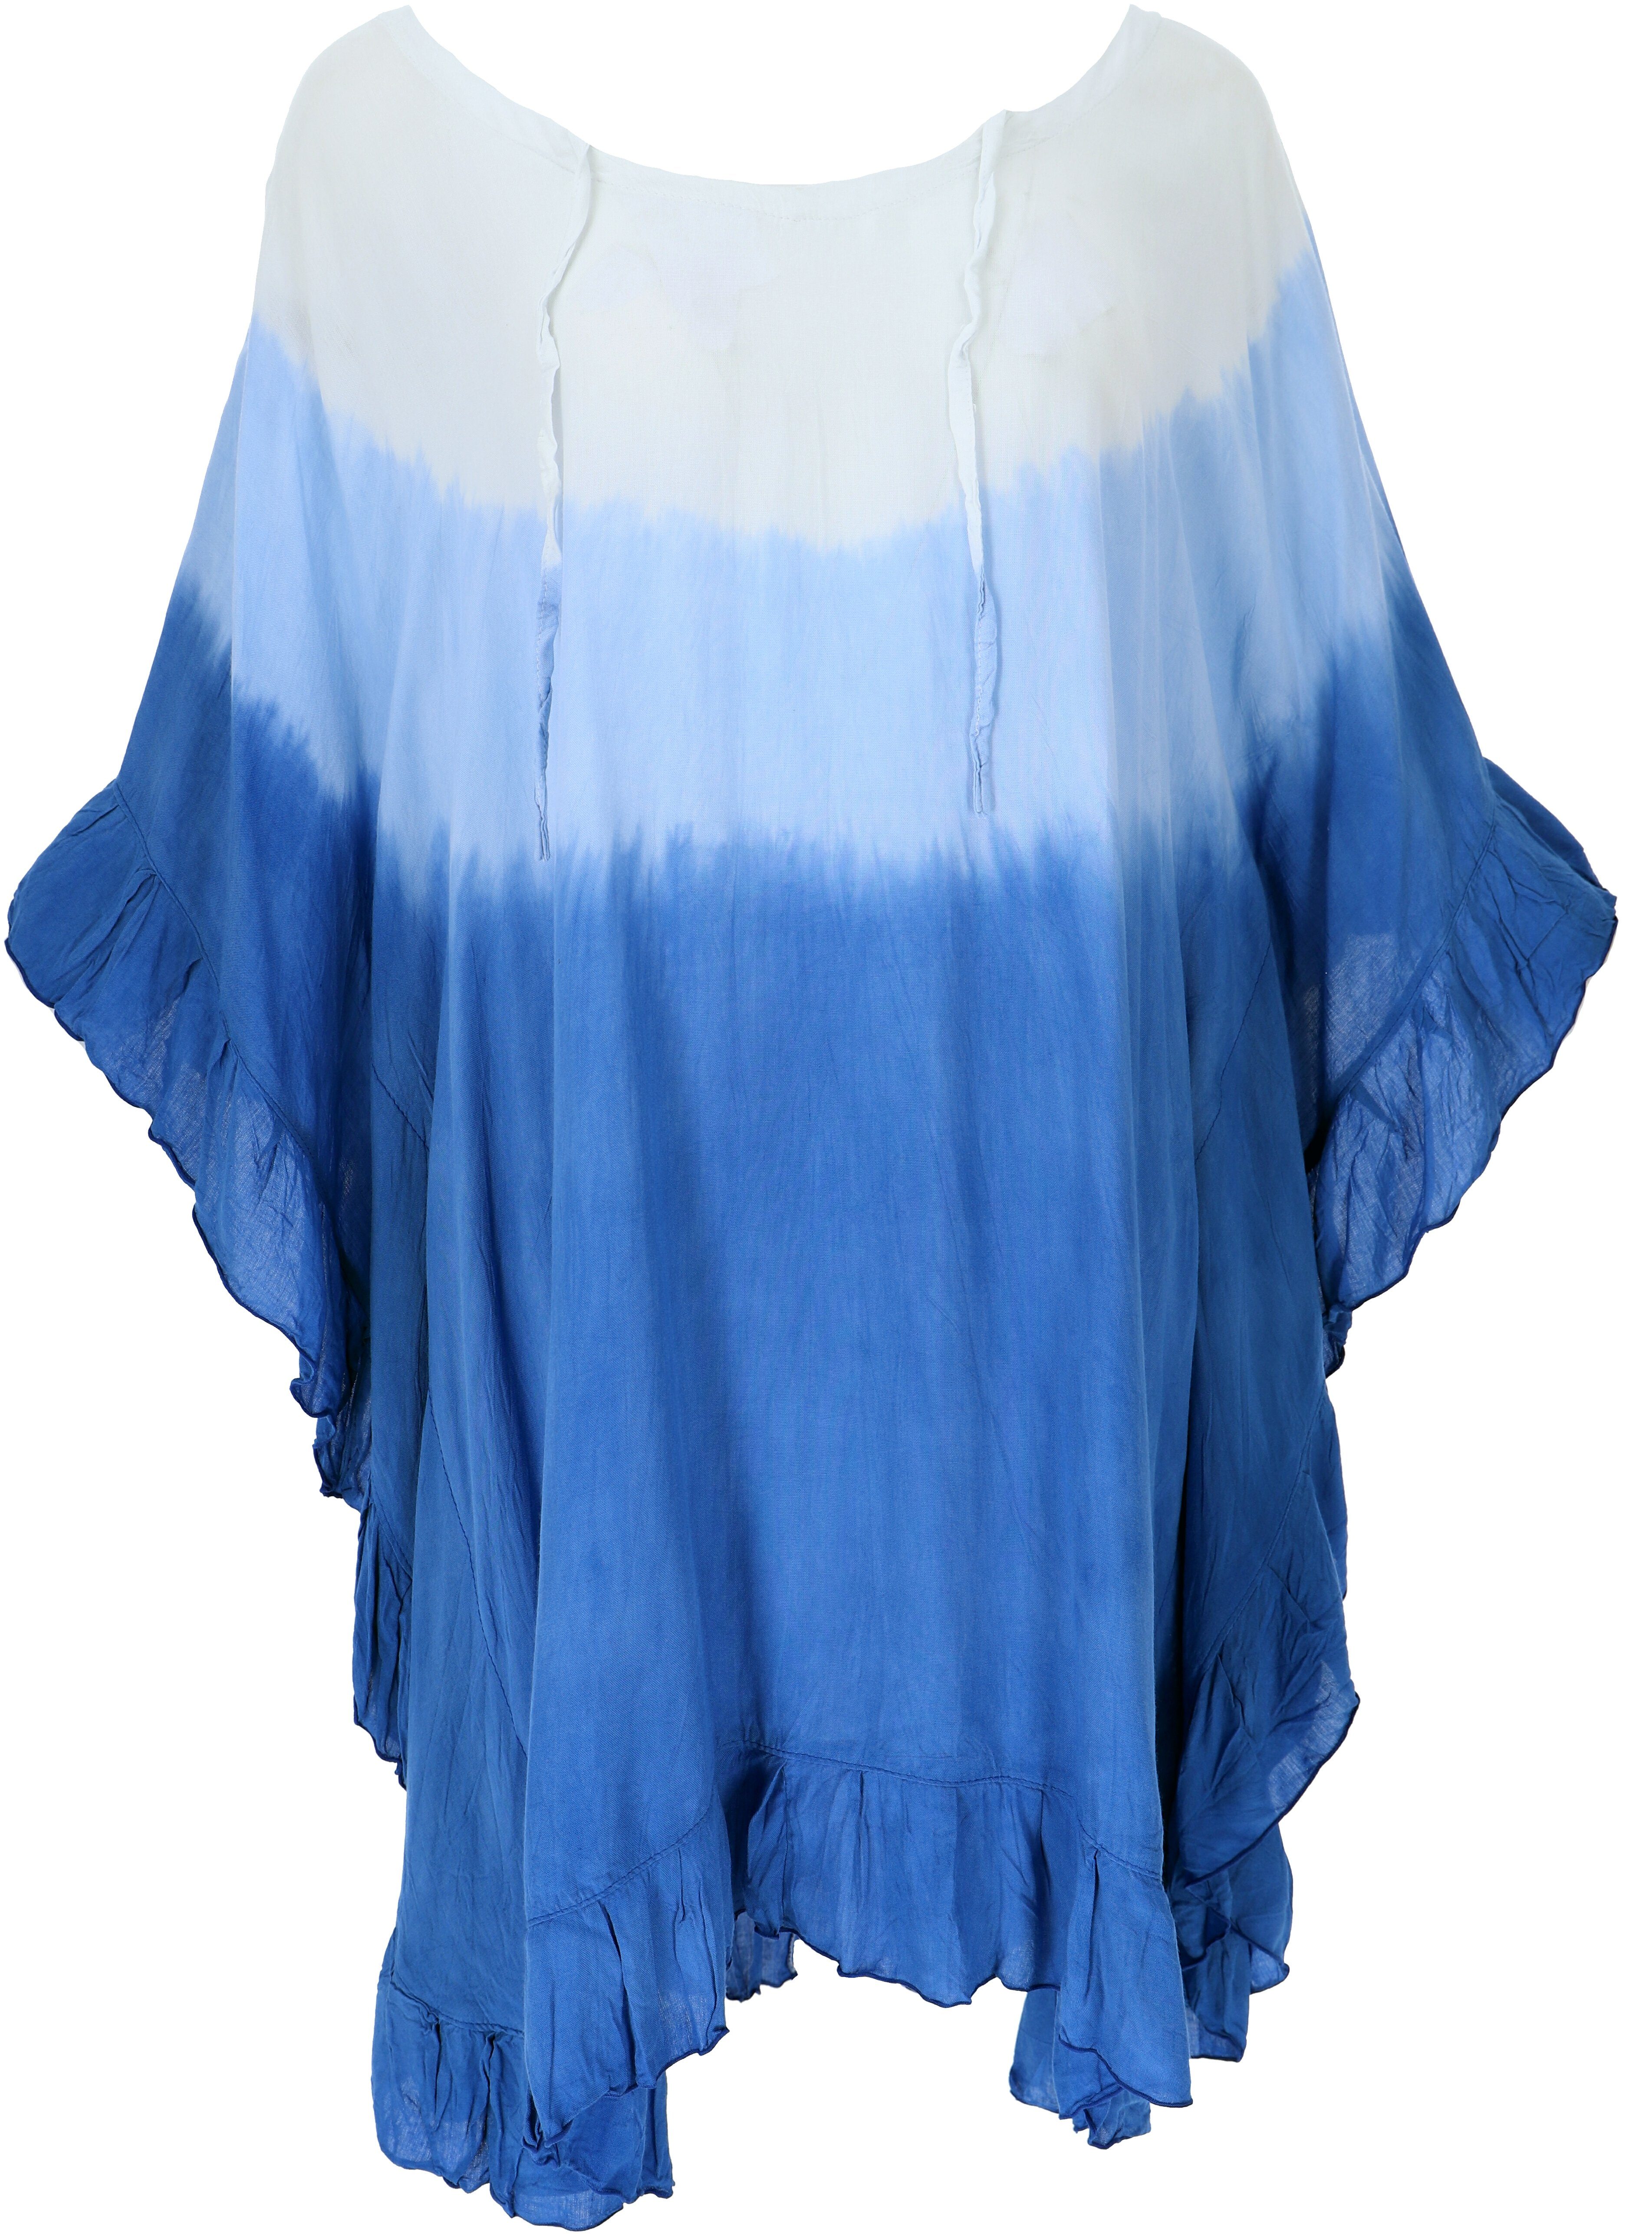 Guru-Shop Longbluse Kaftan, -.. Bekleidung gestreift alternative Strandtunika, blau/weiß Batiktunika